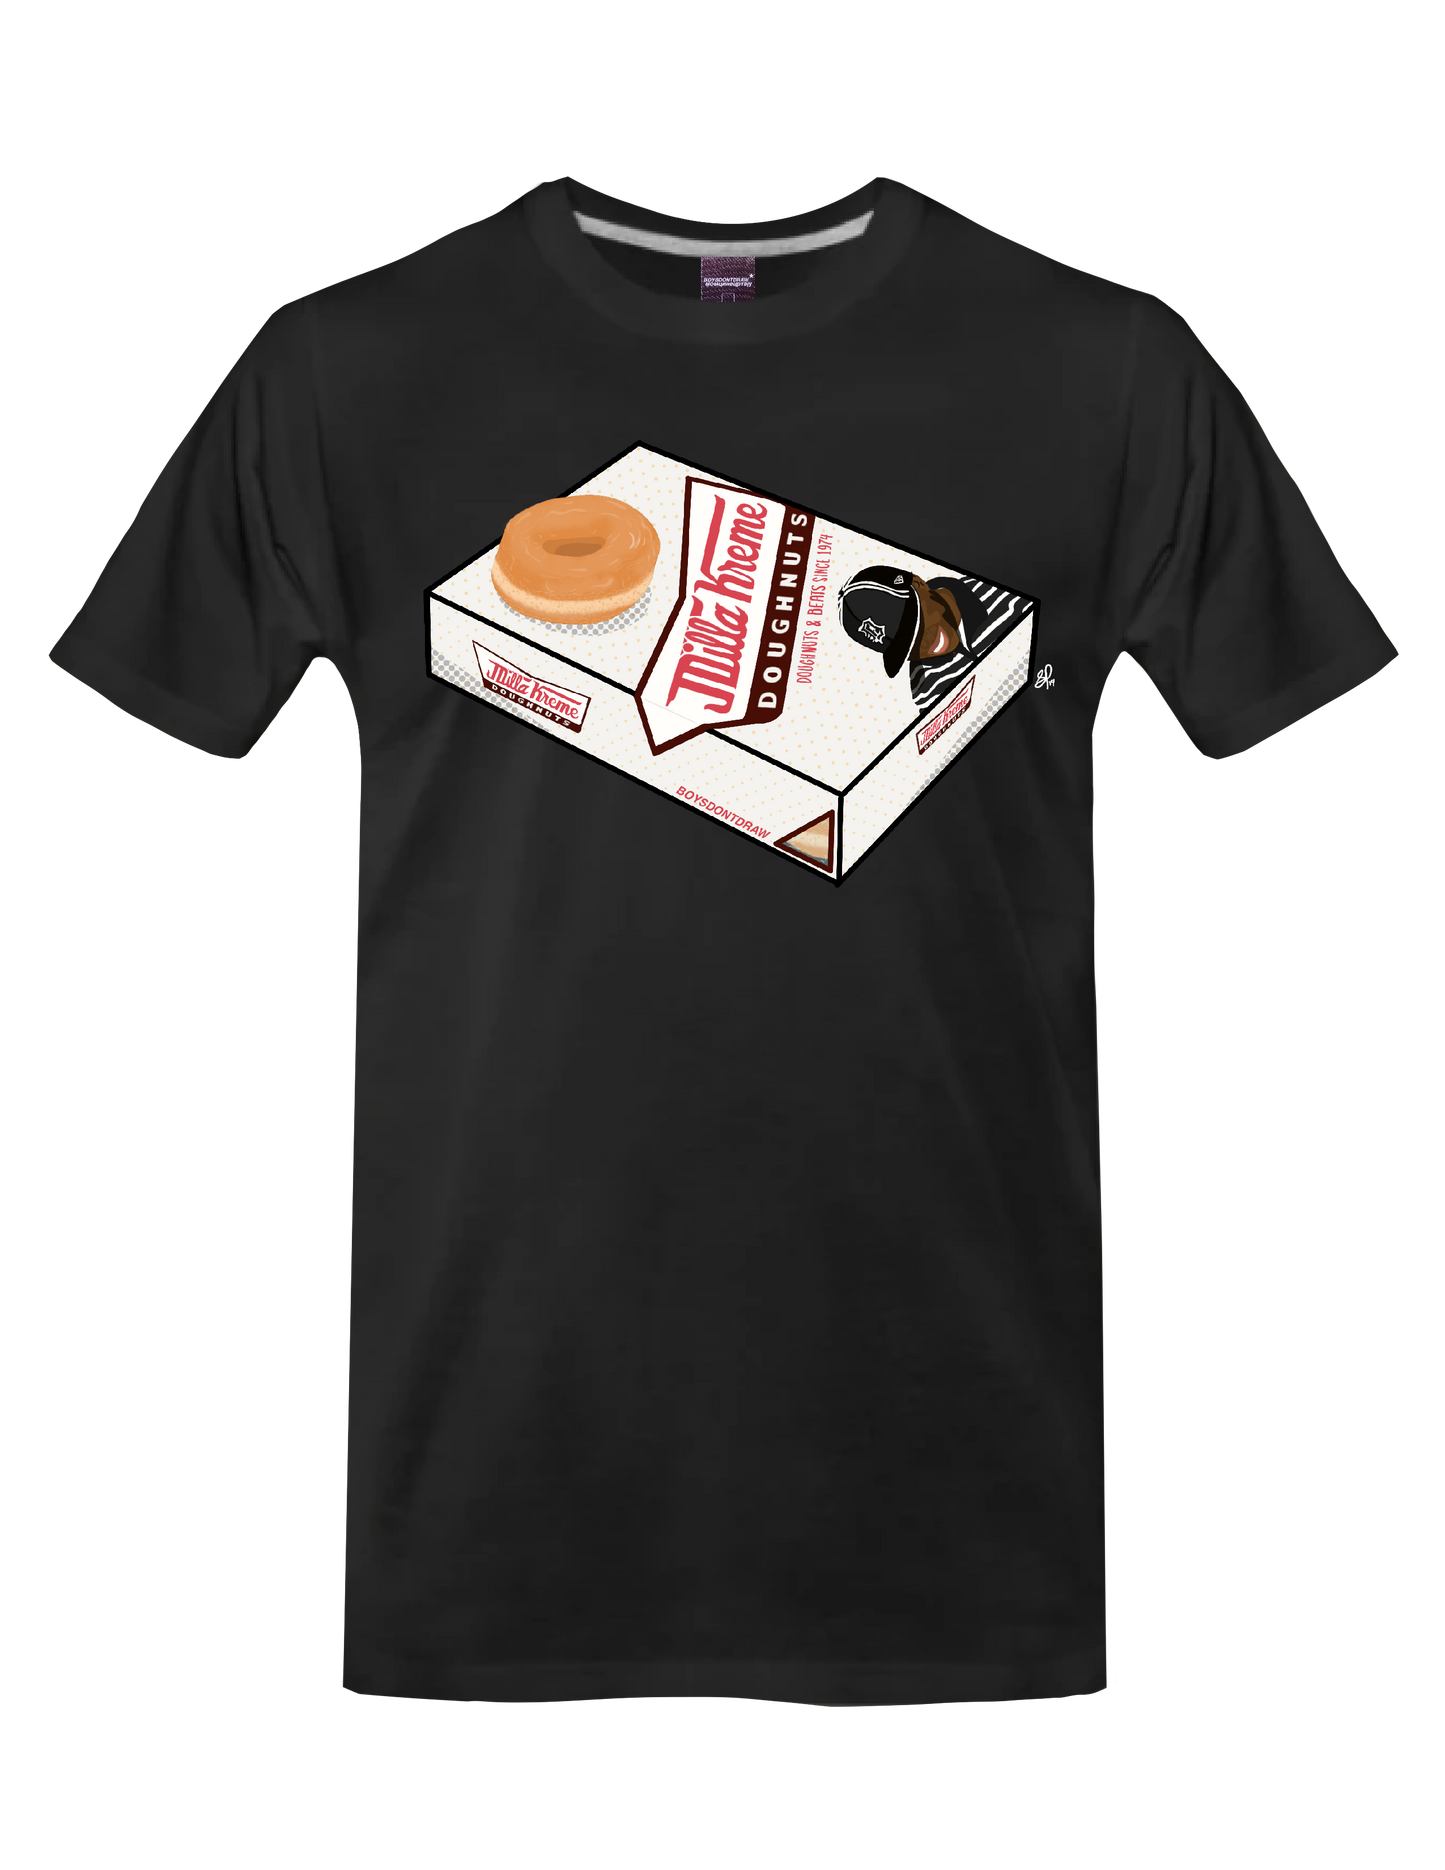 JDILLA KREME DONUTS (Black) - T-Shirt by BOYSDONTDRAW